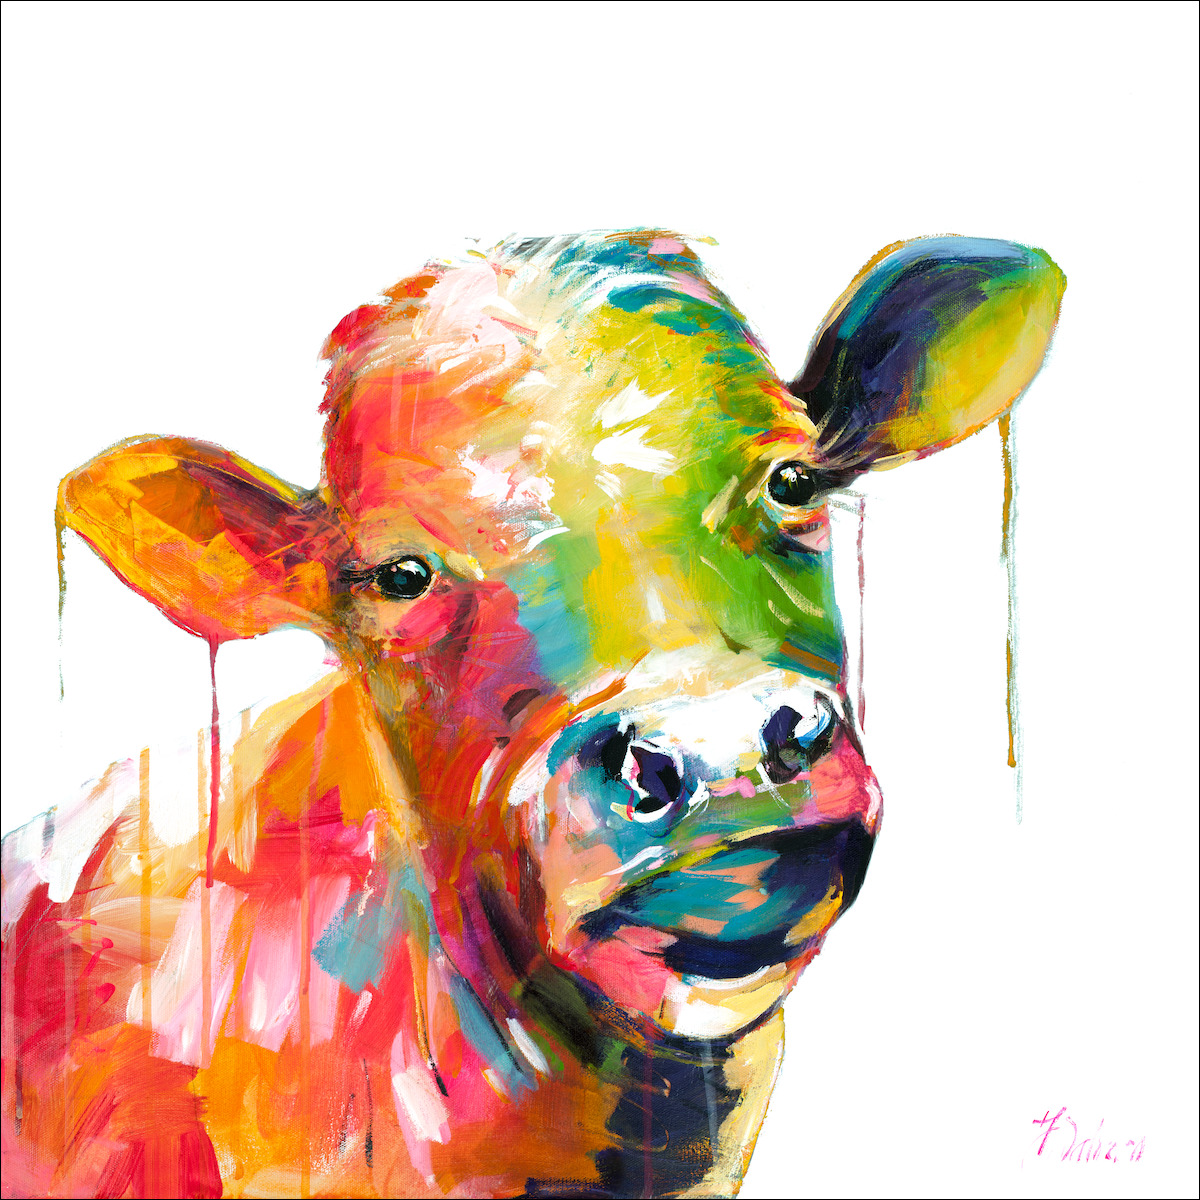 Fluro Animal Animal "Cows with Attitude 5" On White Variant From Judith Dalozzo Artwork